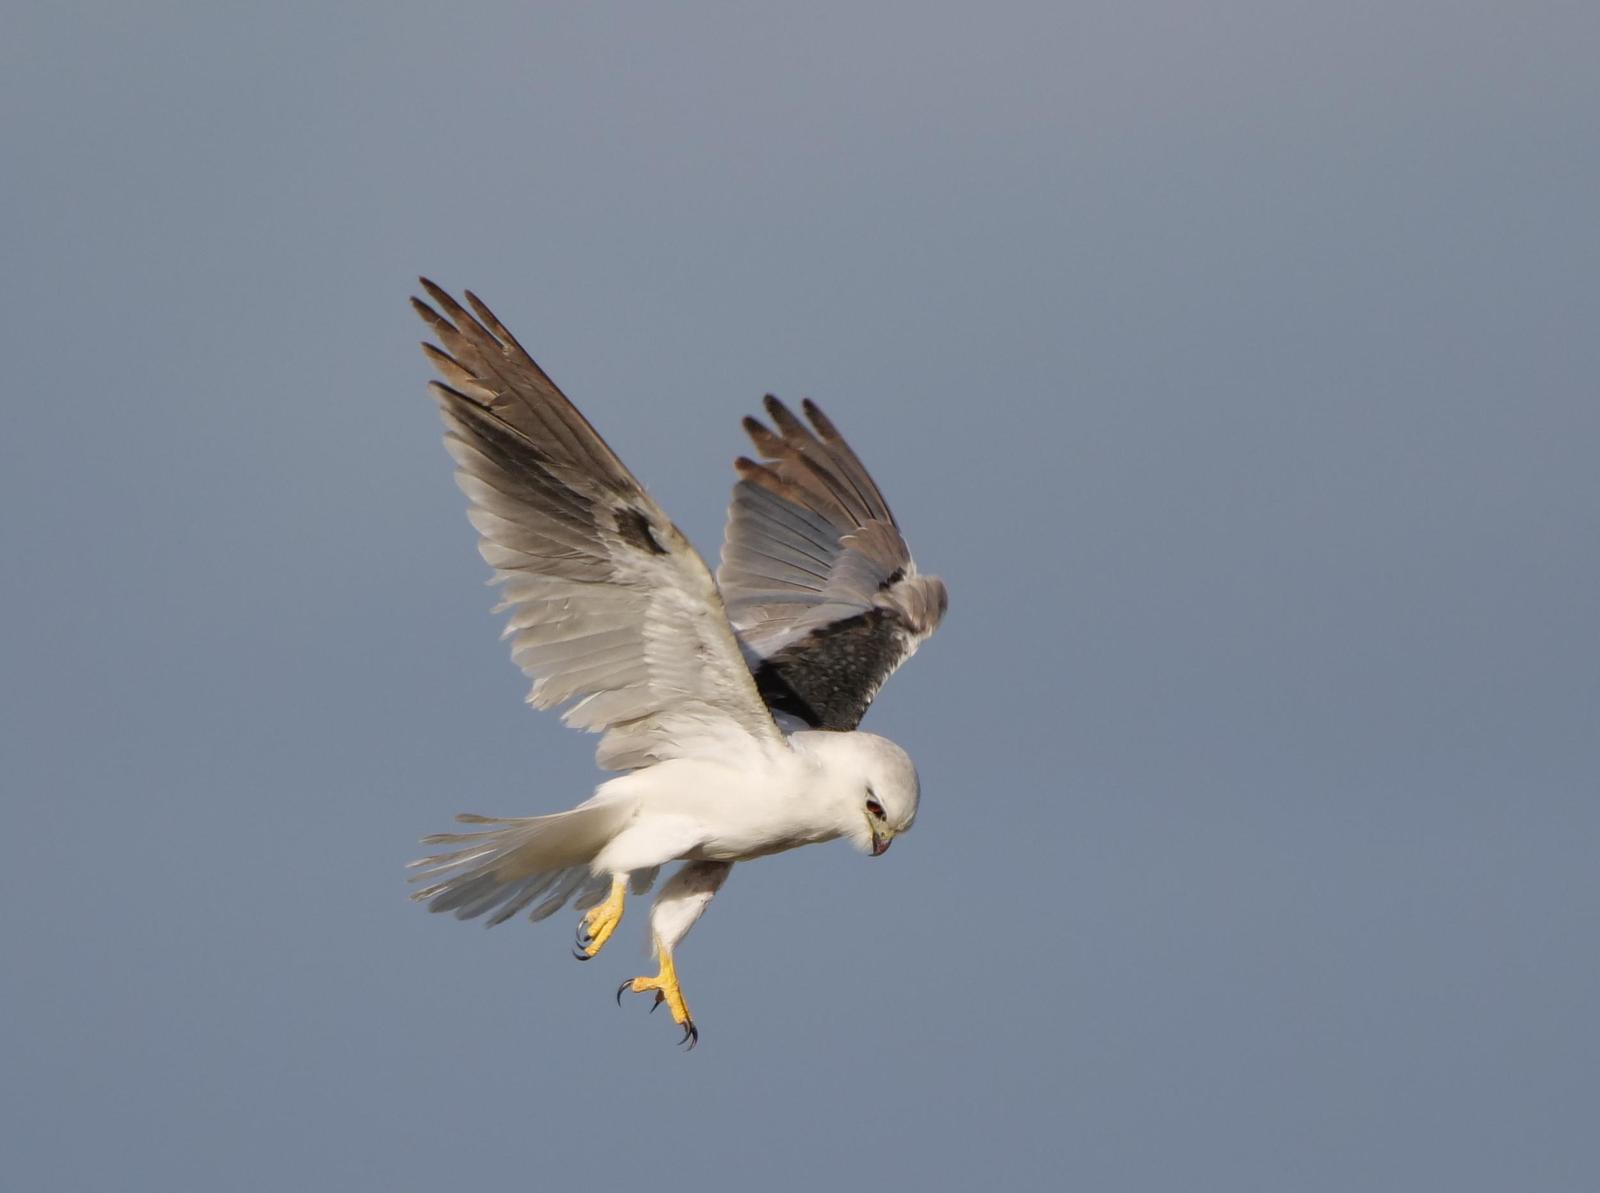 Black-shouldered Kite Photo by Peter Lowe